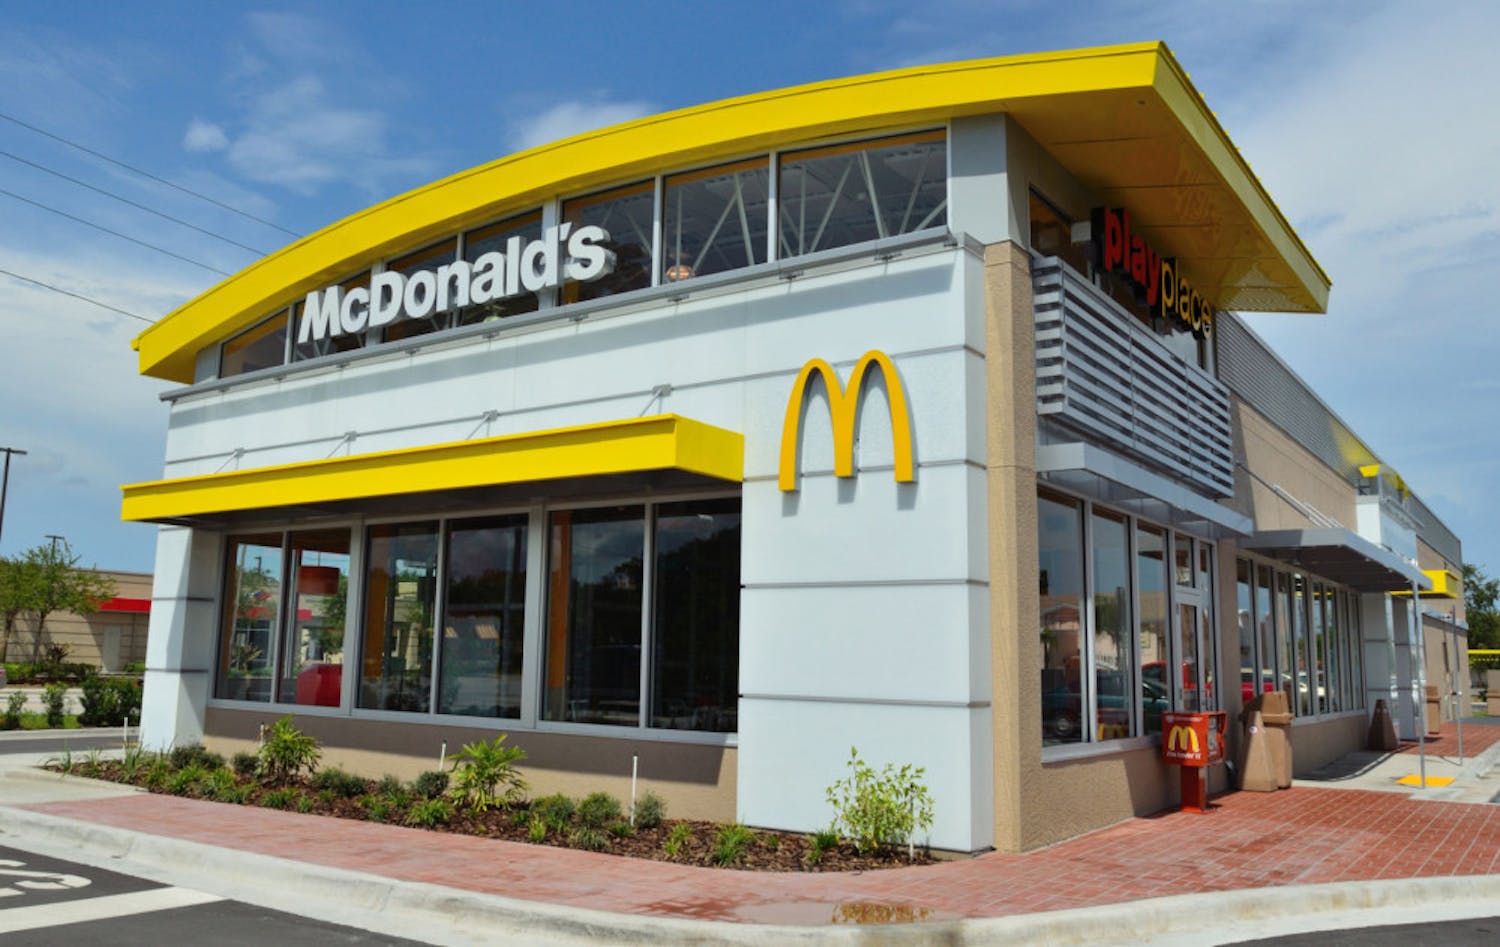 Pictured: A McDonald's restaurant in St. Petersburg, FL.&nbsp;